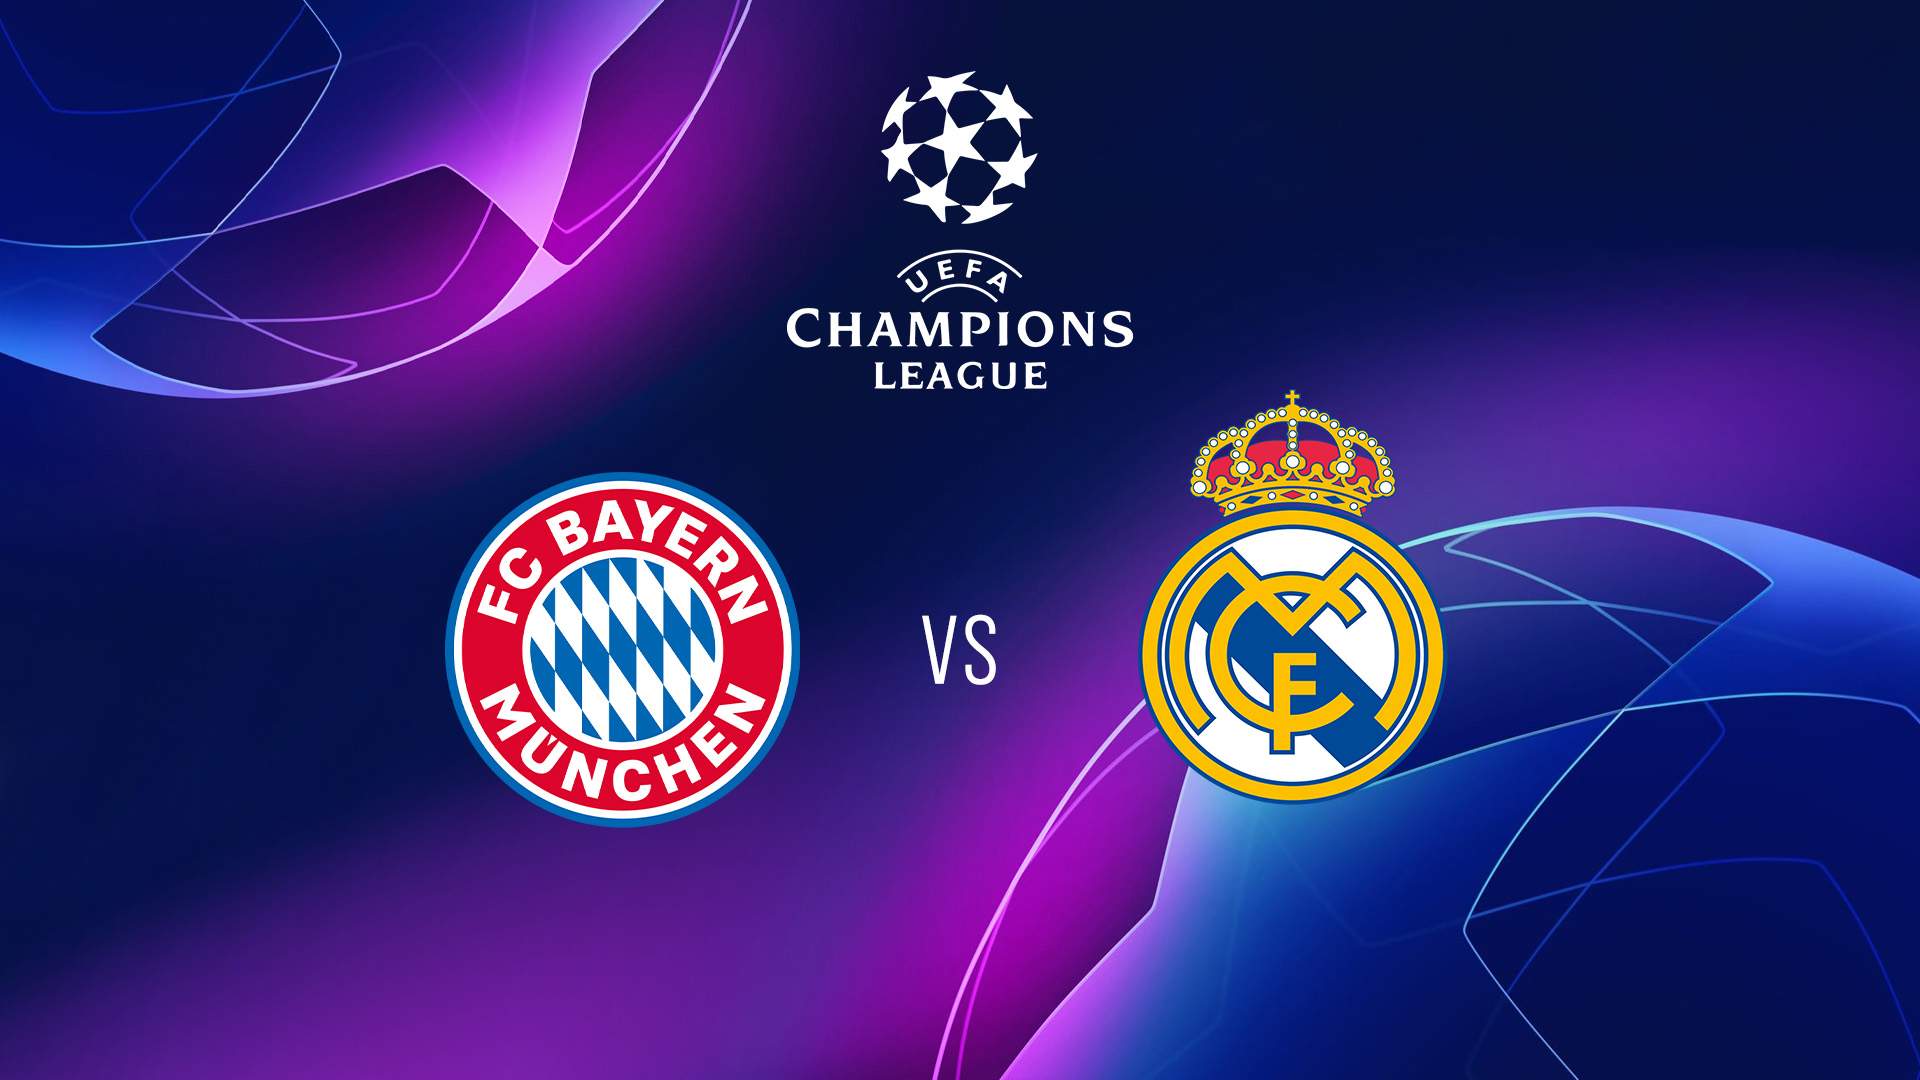 Bayern Munich - Real Madrid Match Live: Schedule, TV Broadcast & Streaming - Media7